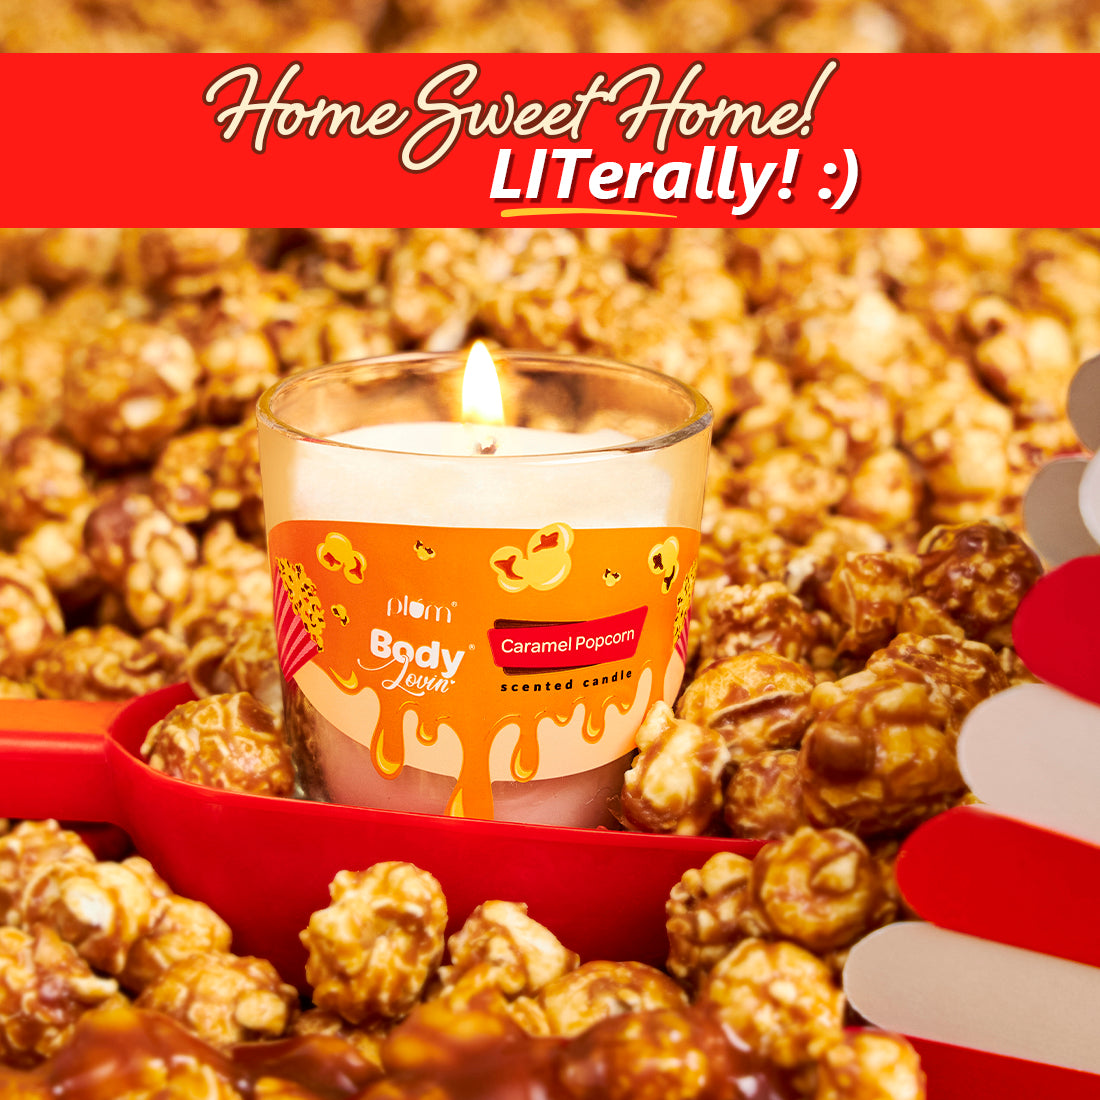 Plum BodyLovin' Caramel Popcorn Scented Candle | Long-lasting Fragrance | Evenly Melting Wax